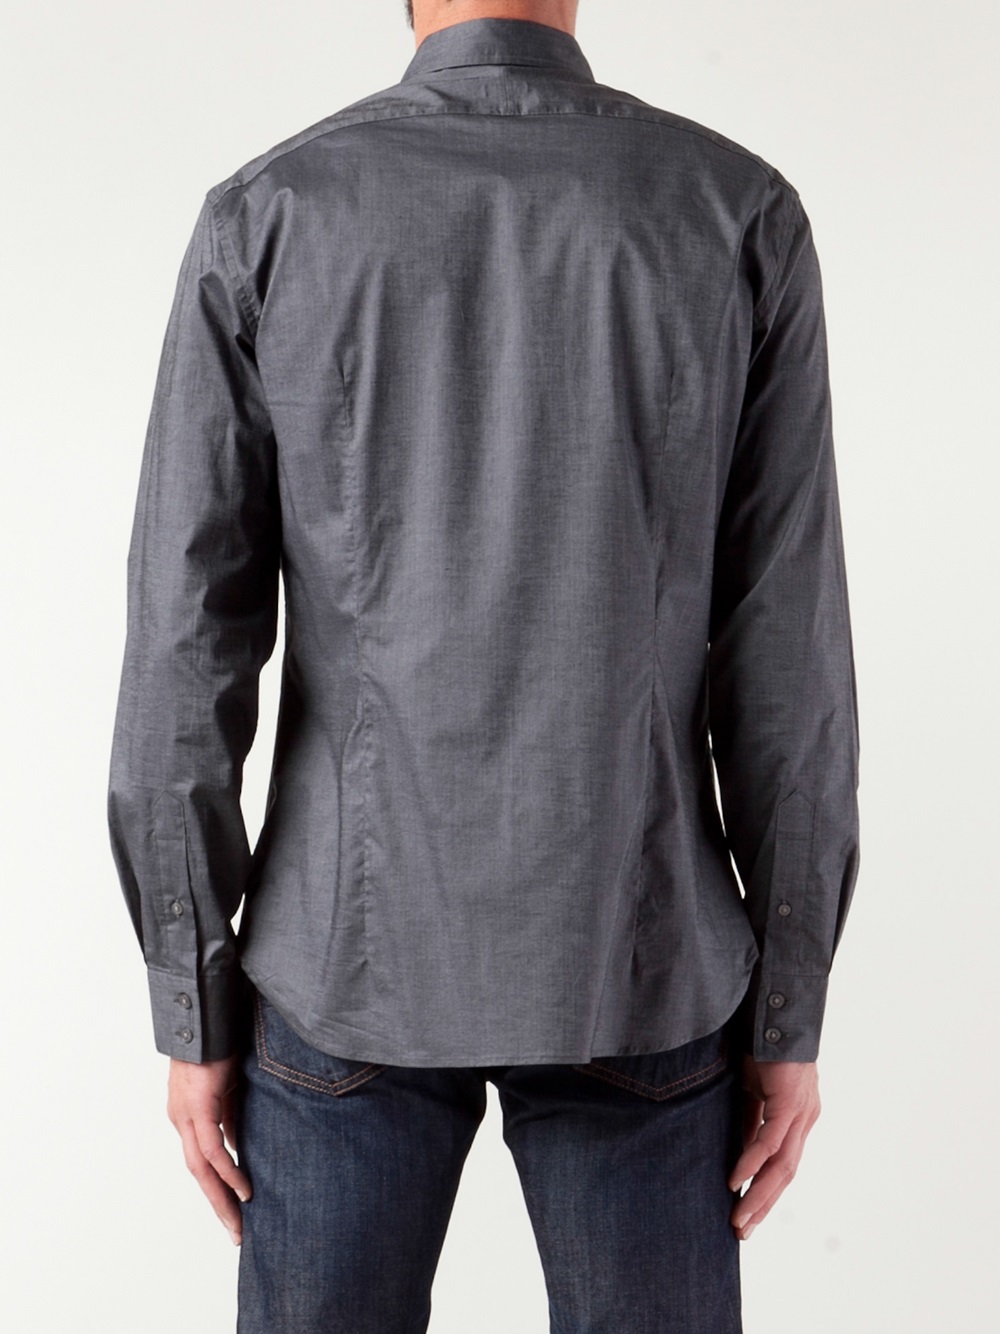 John Varvatos Button Down Shirt in Grey (Gray) for Men - Lyst